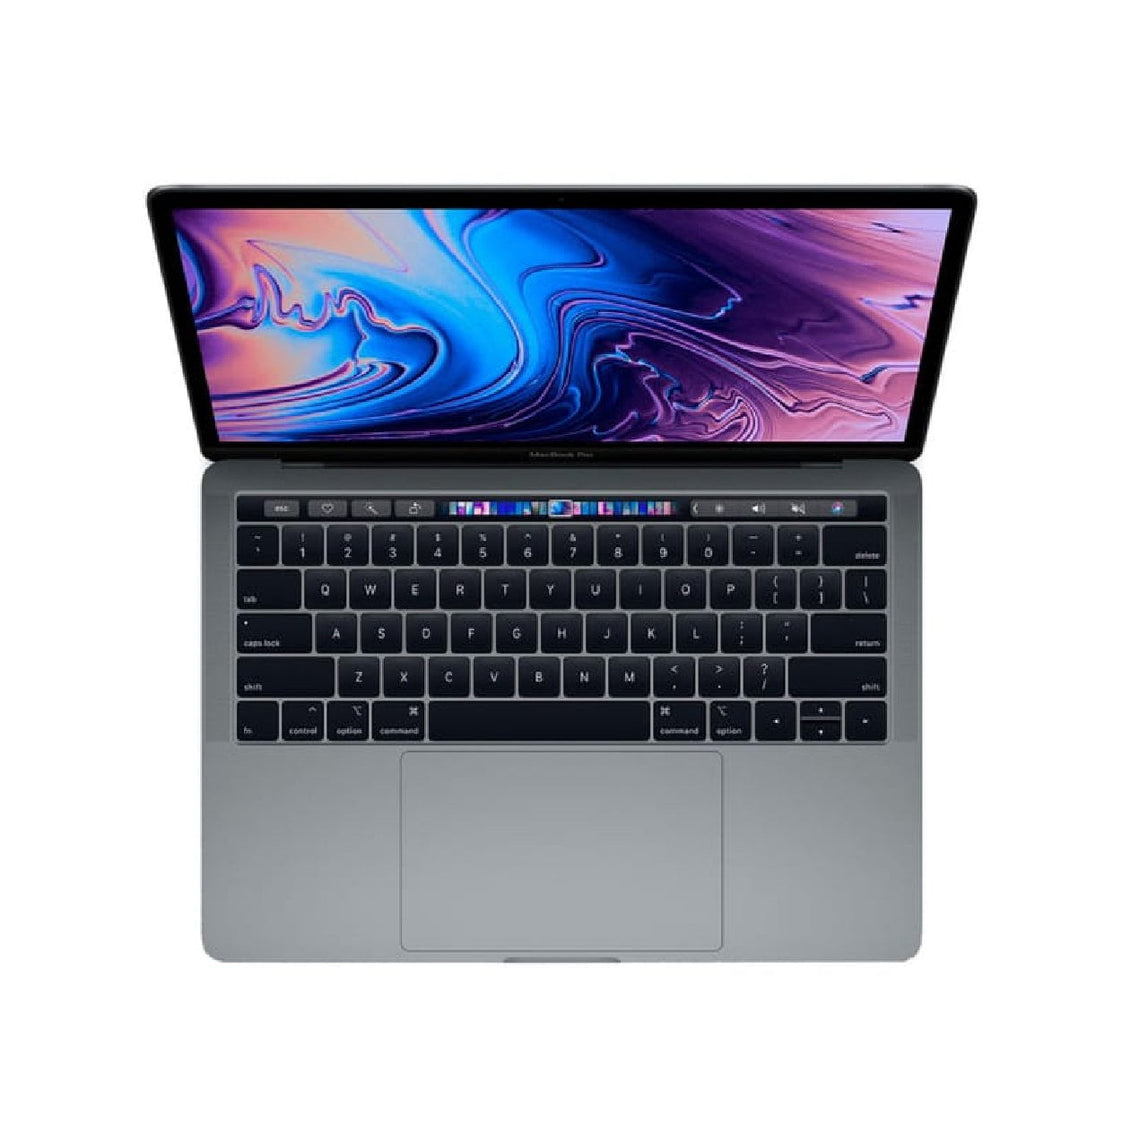 MacBook Pro 2018 (13-inch, i5) - iApples